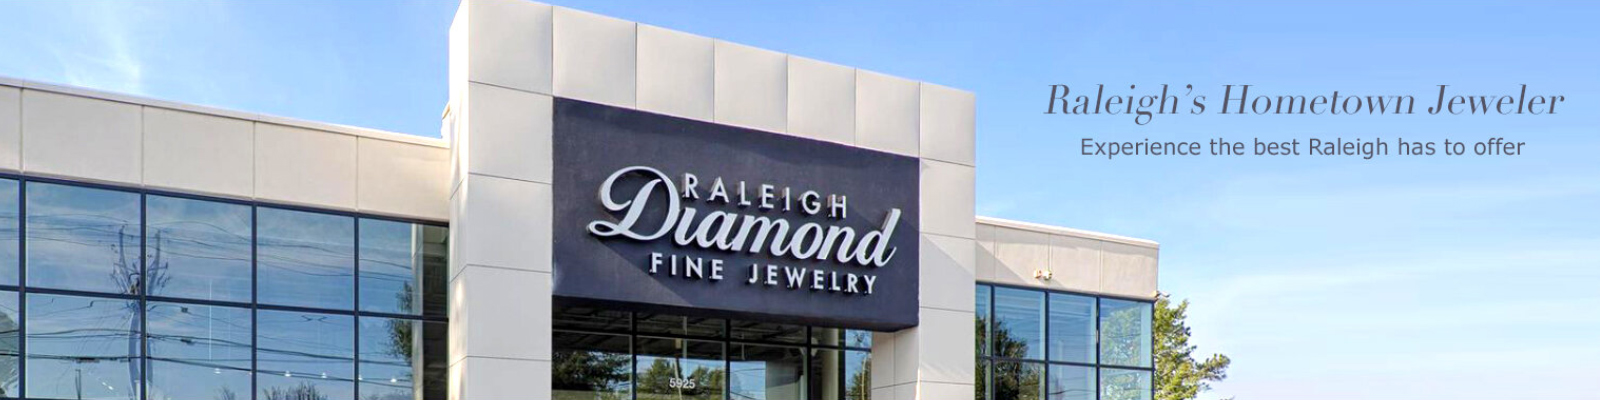 Raleigh Diamond Fine Jewelry - Raleigh, NC